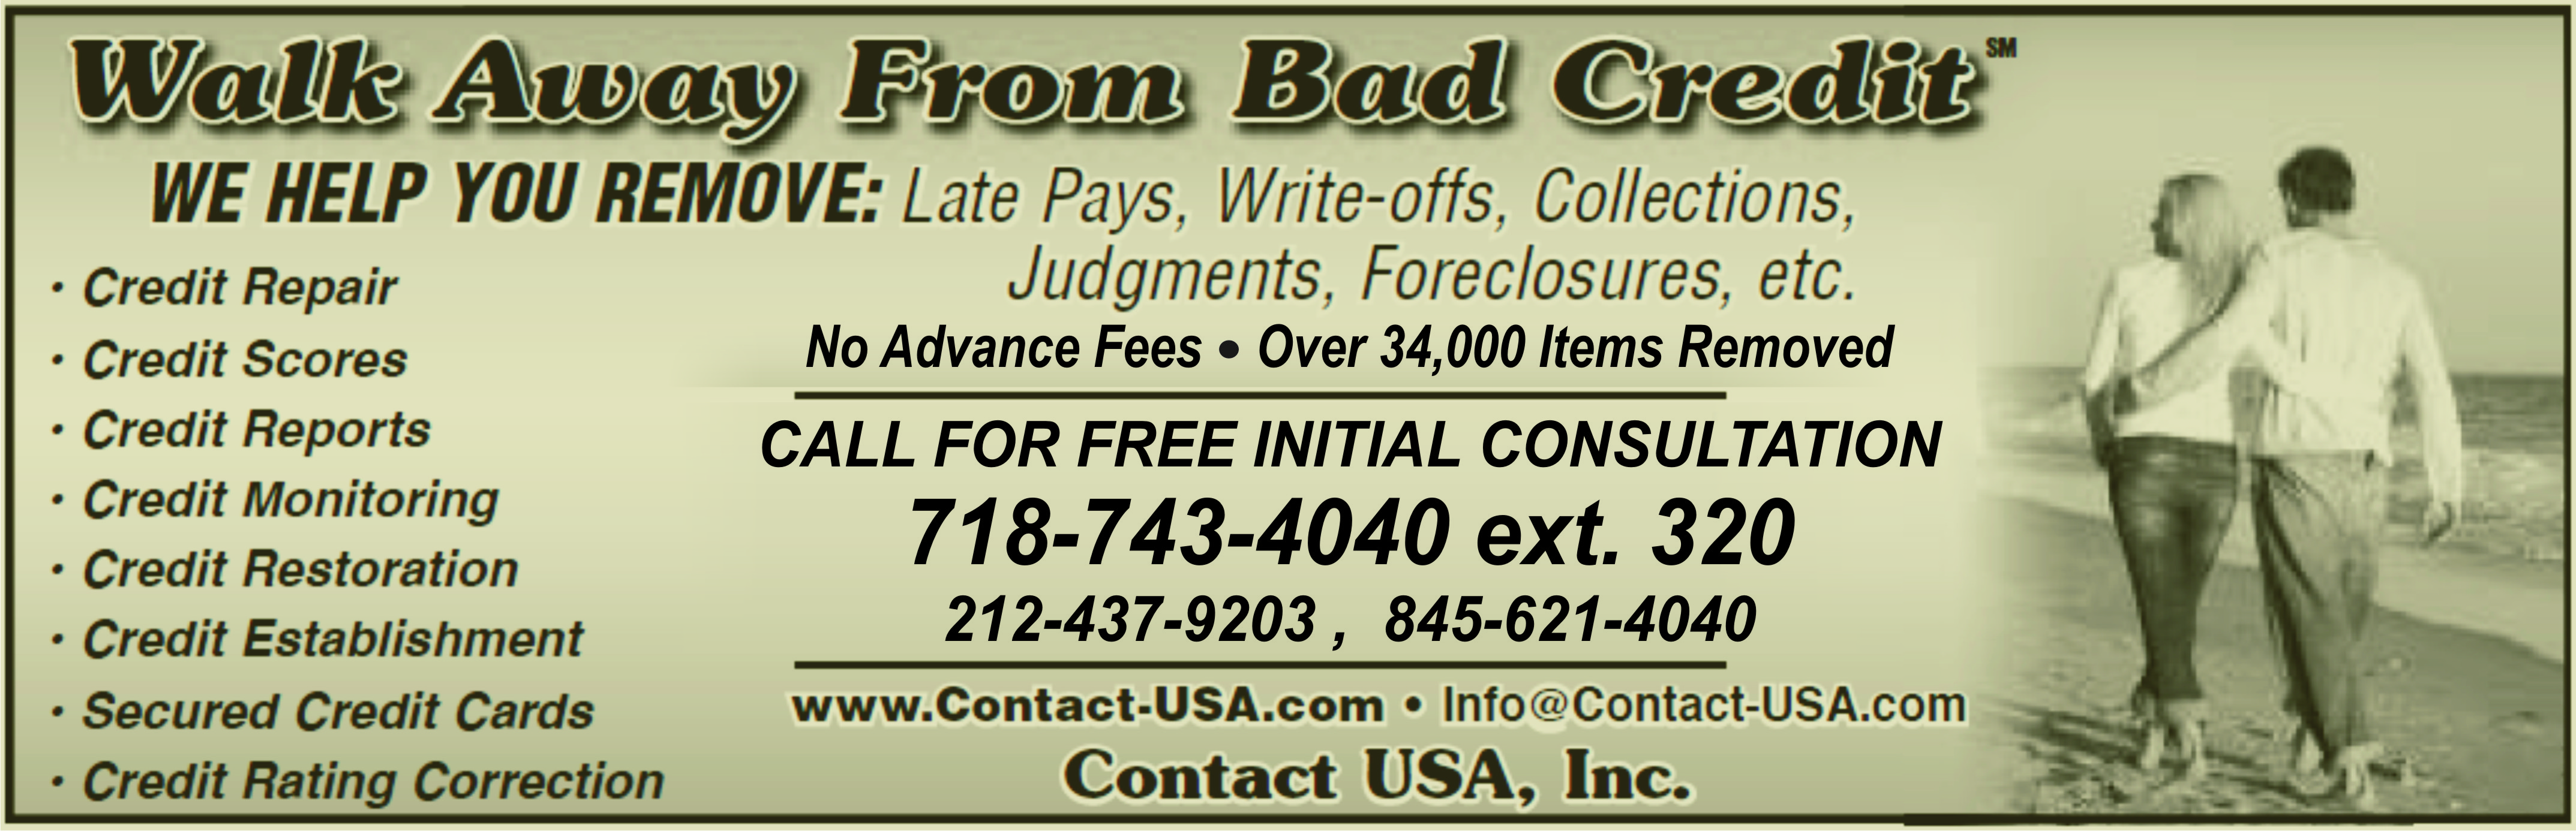 Contact USA Credit Repair